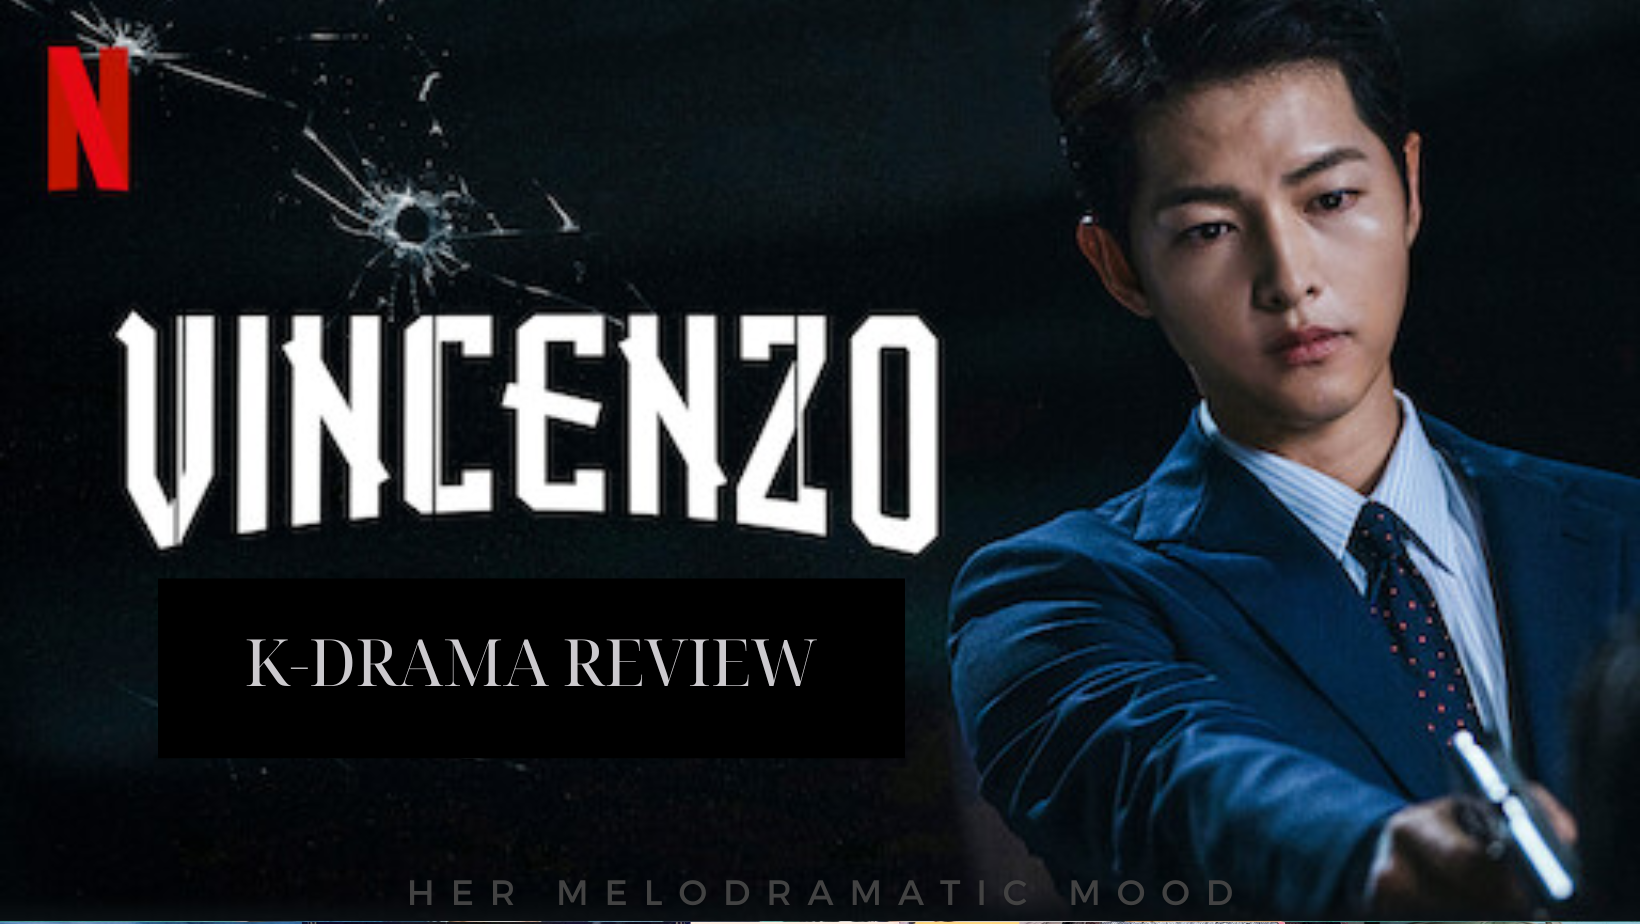 Vincenzo K-Drama Review